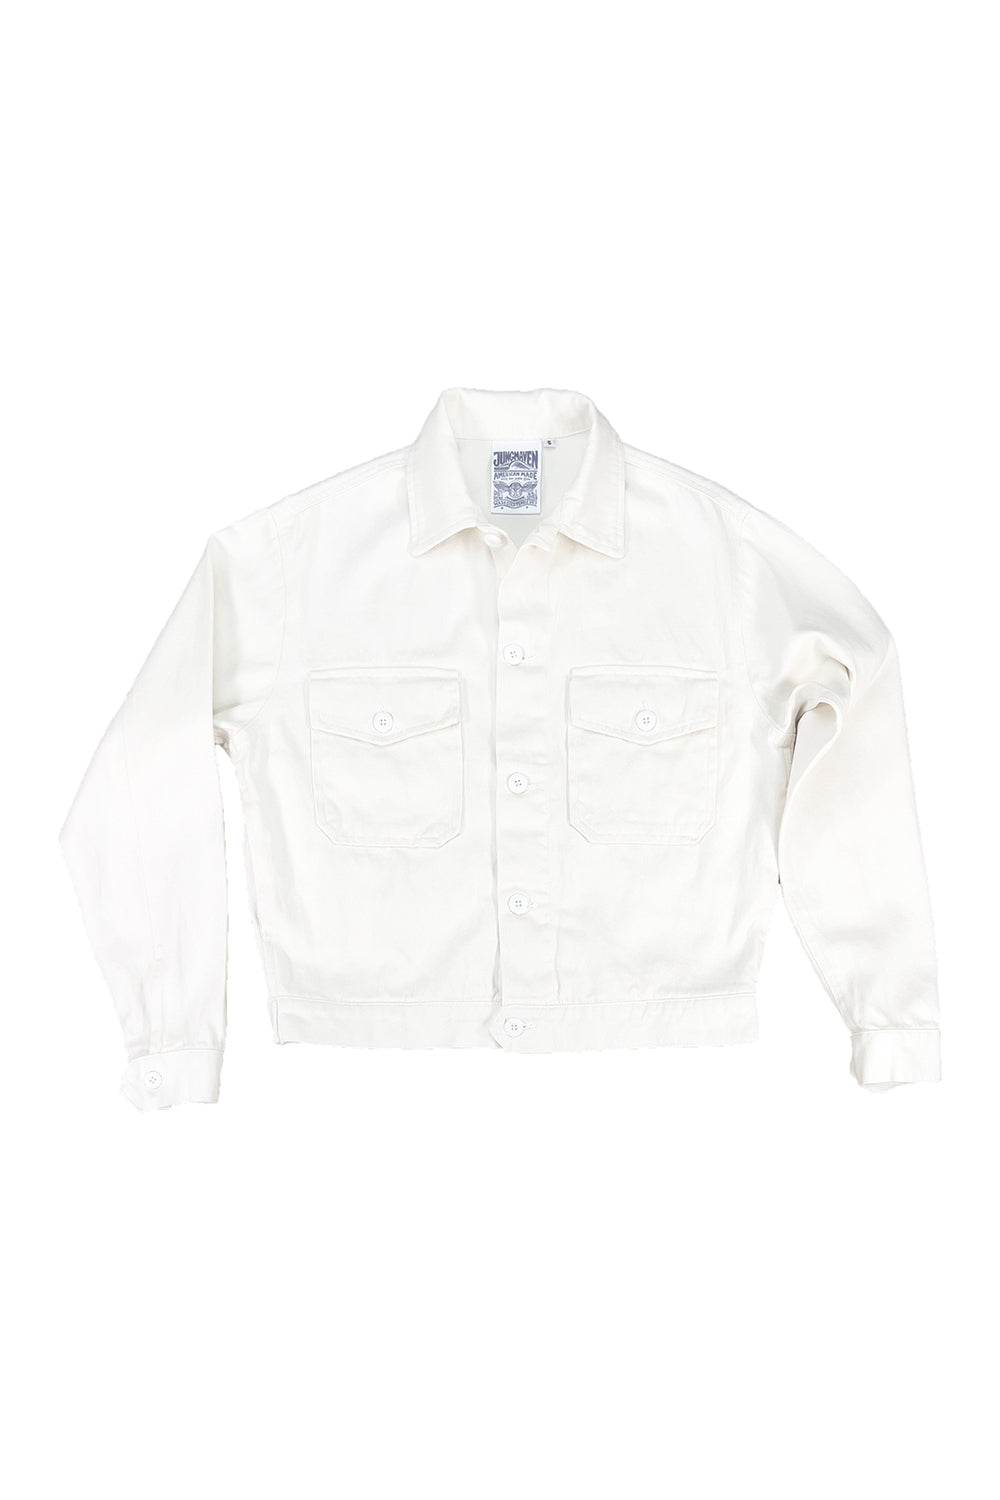 Mechanic Jacket | Jungmaven Hemp Clothing & Accessories / Color: Washed White